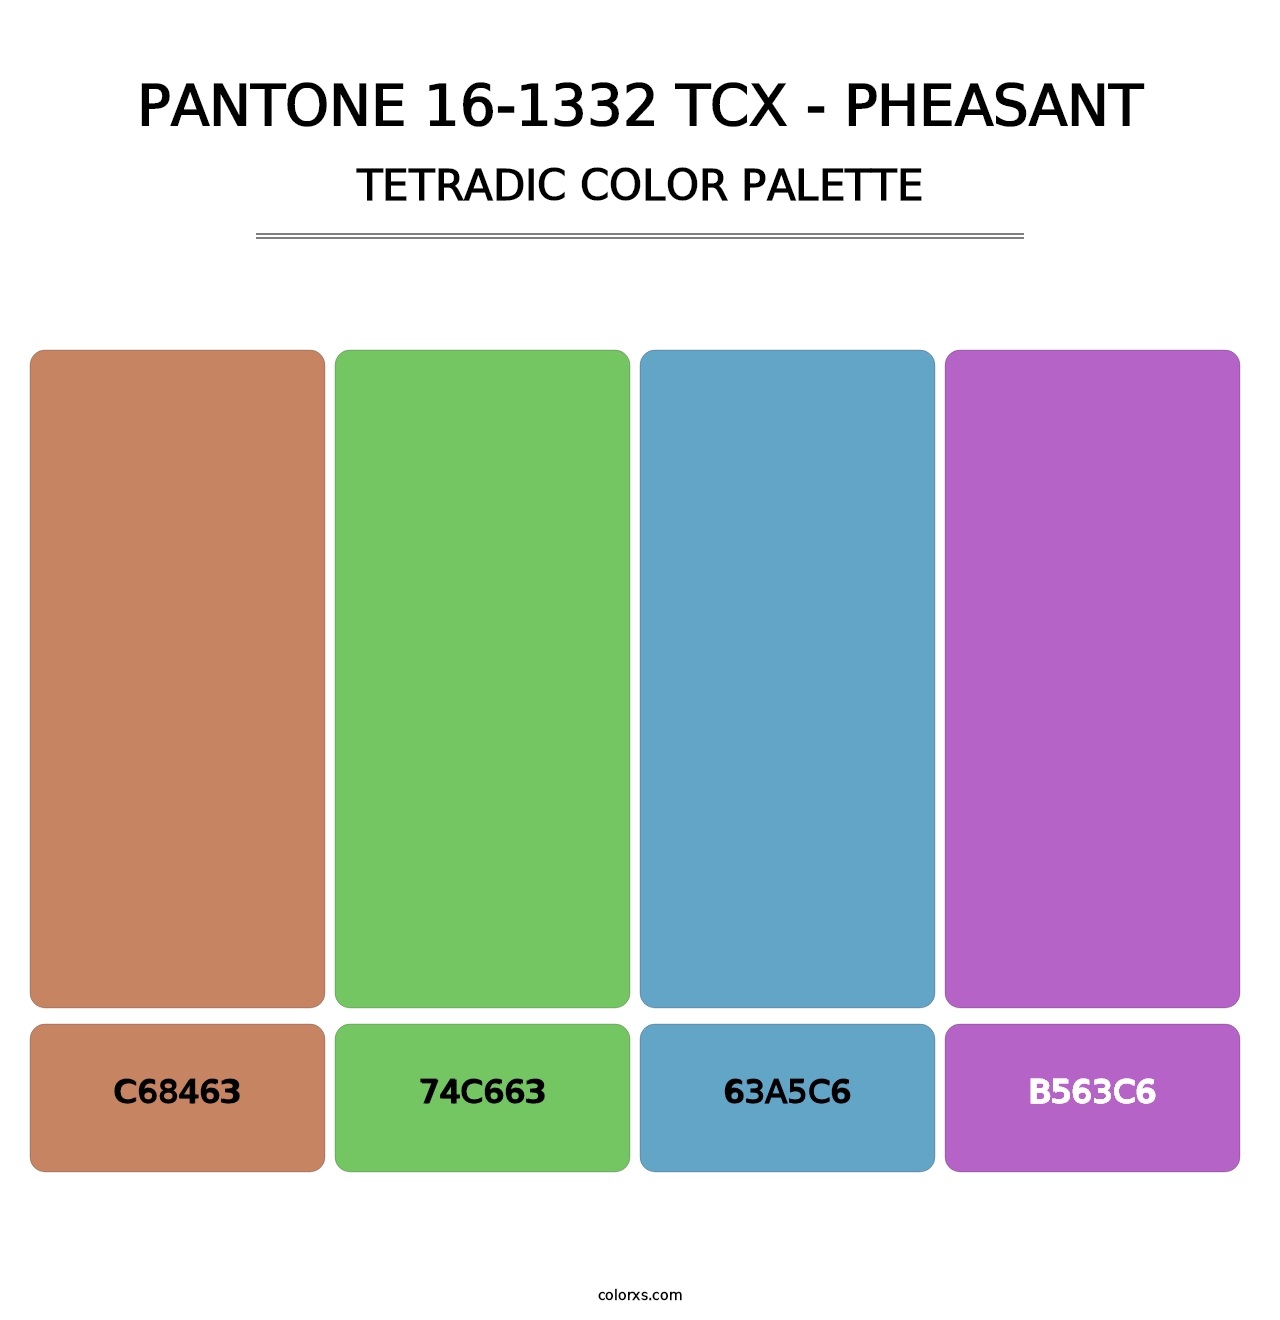 PANTONE 16-1332 TCX - Pheasant - Tetradic Color Palette